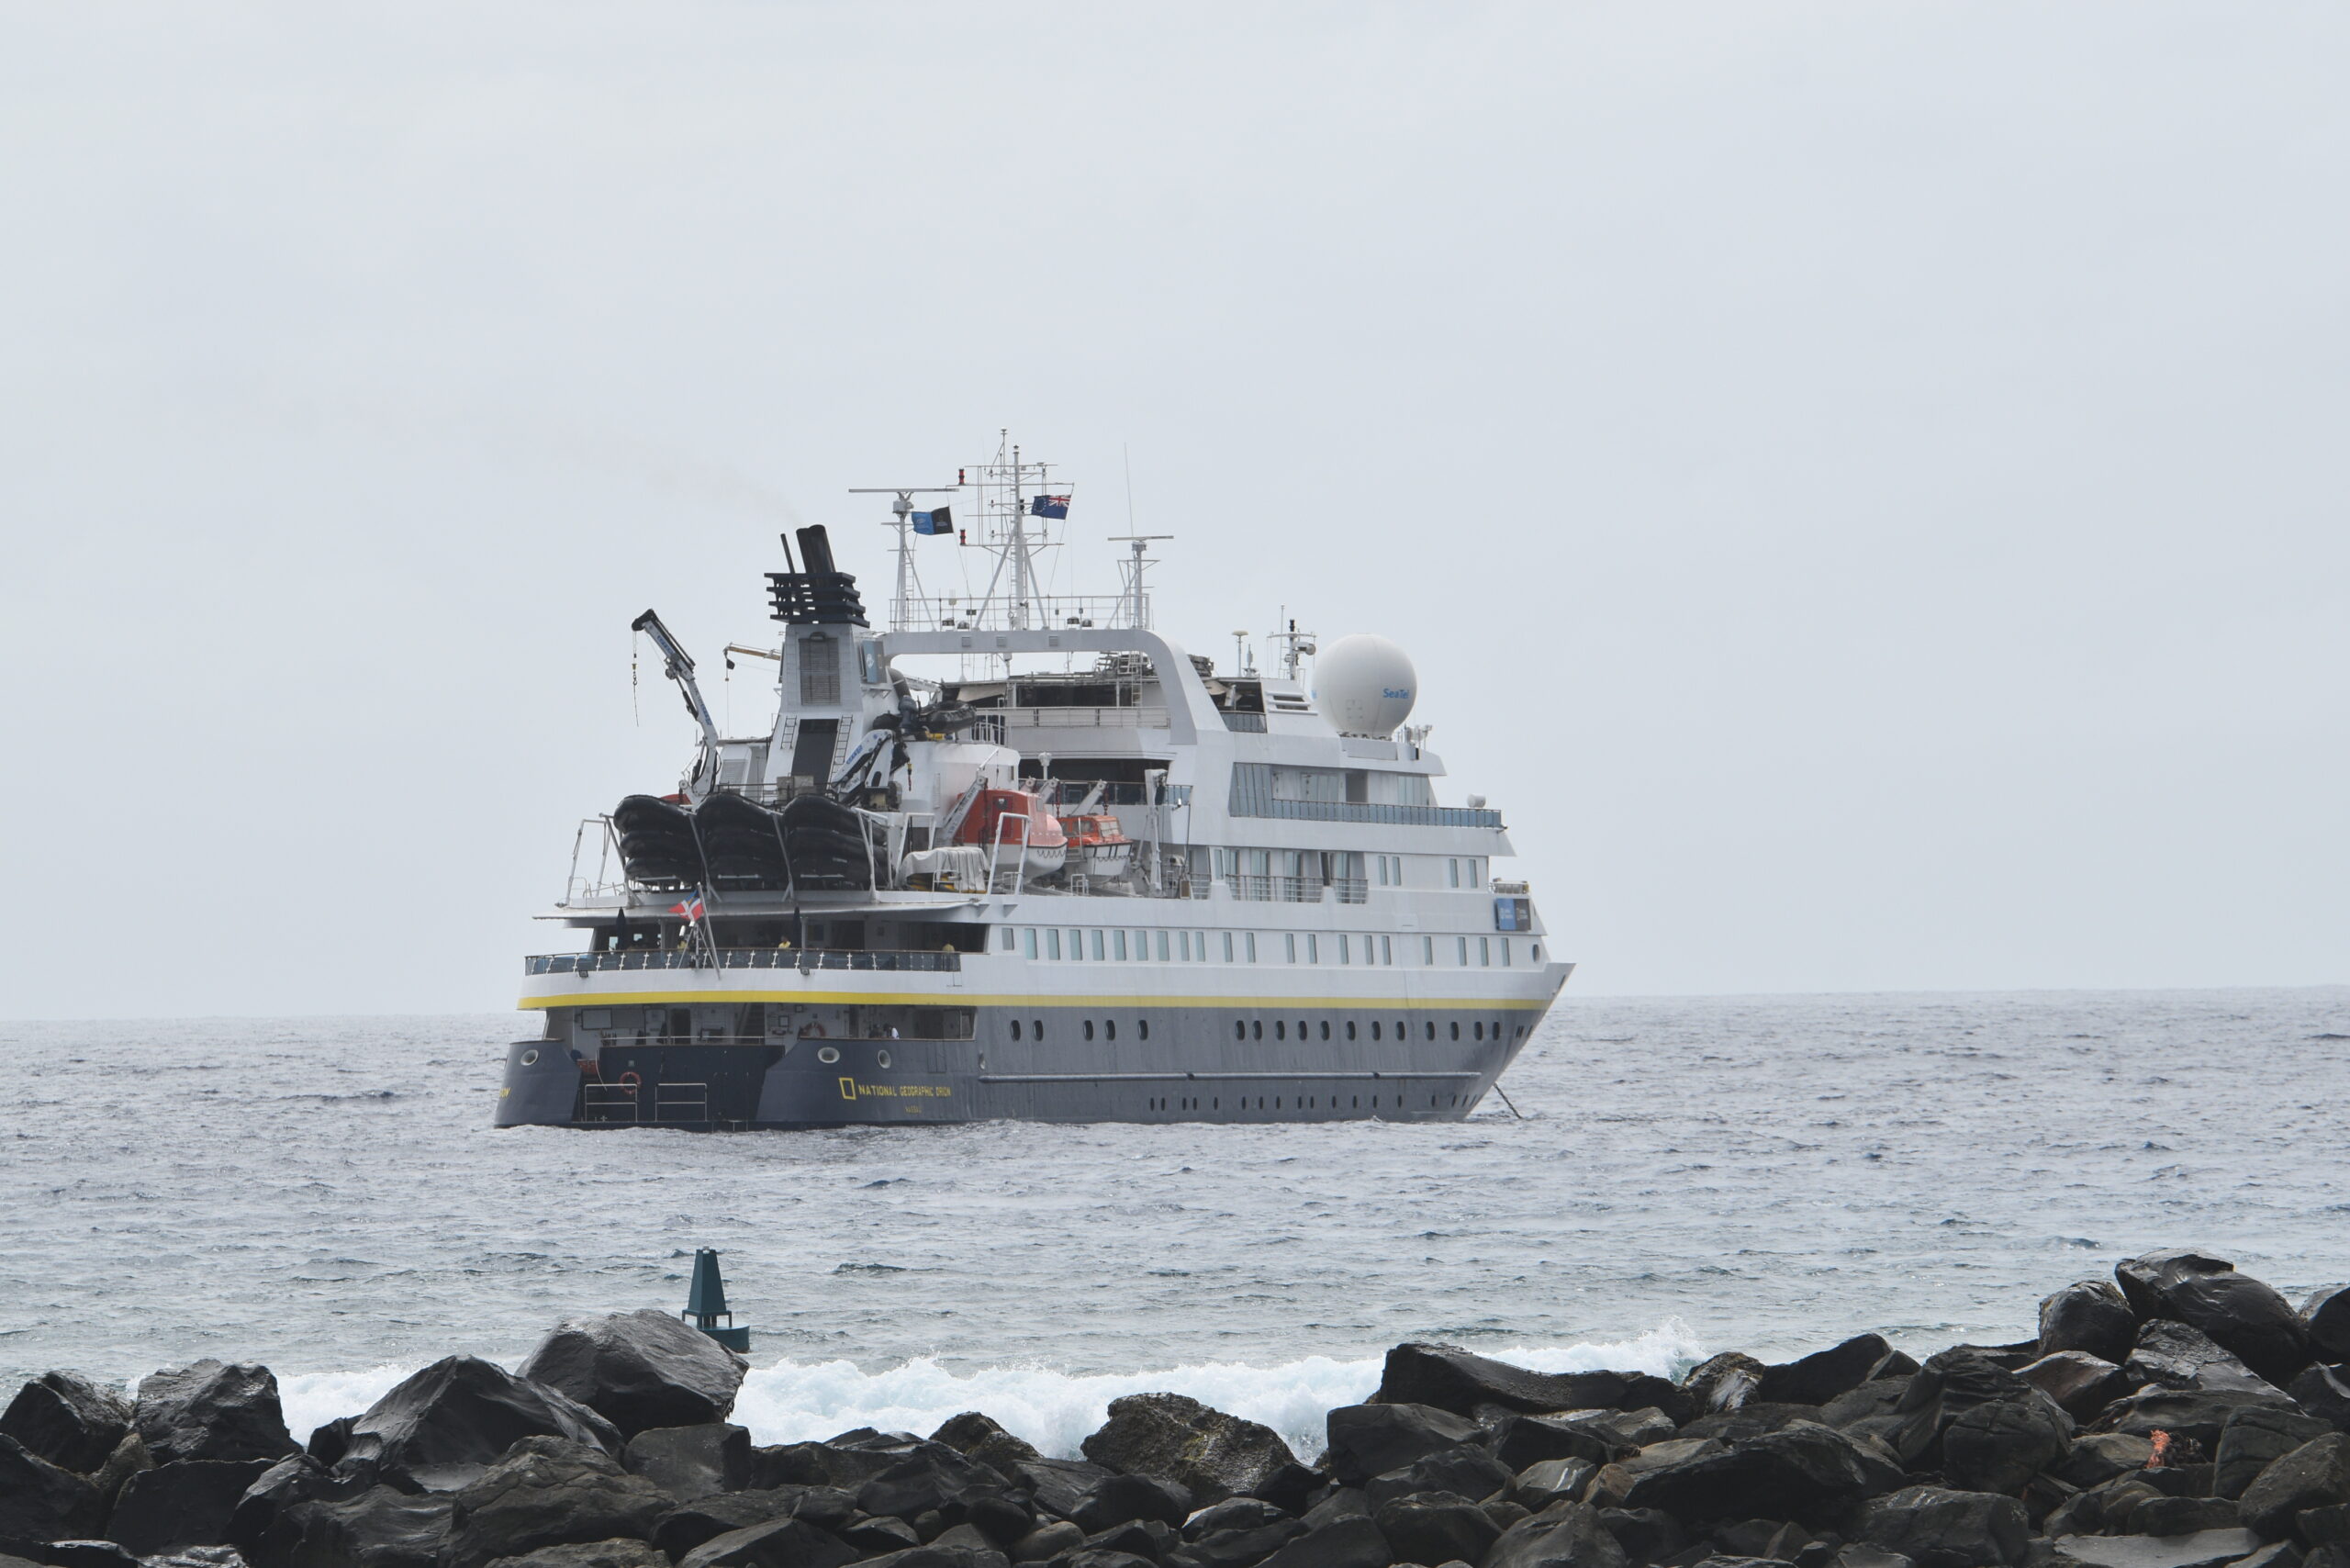 National Geographic Orion docks in Rarotonga